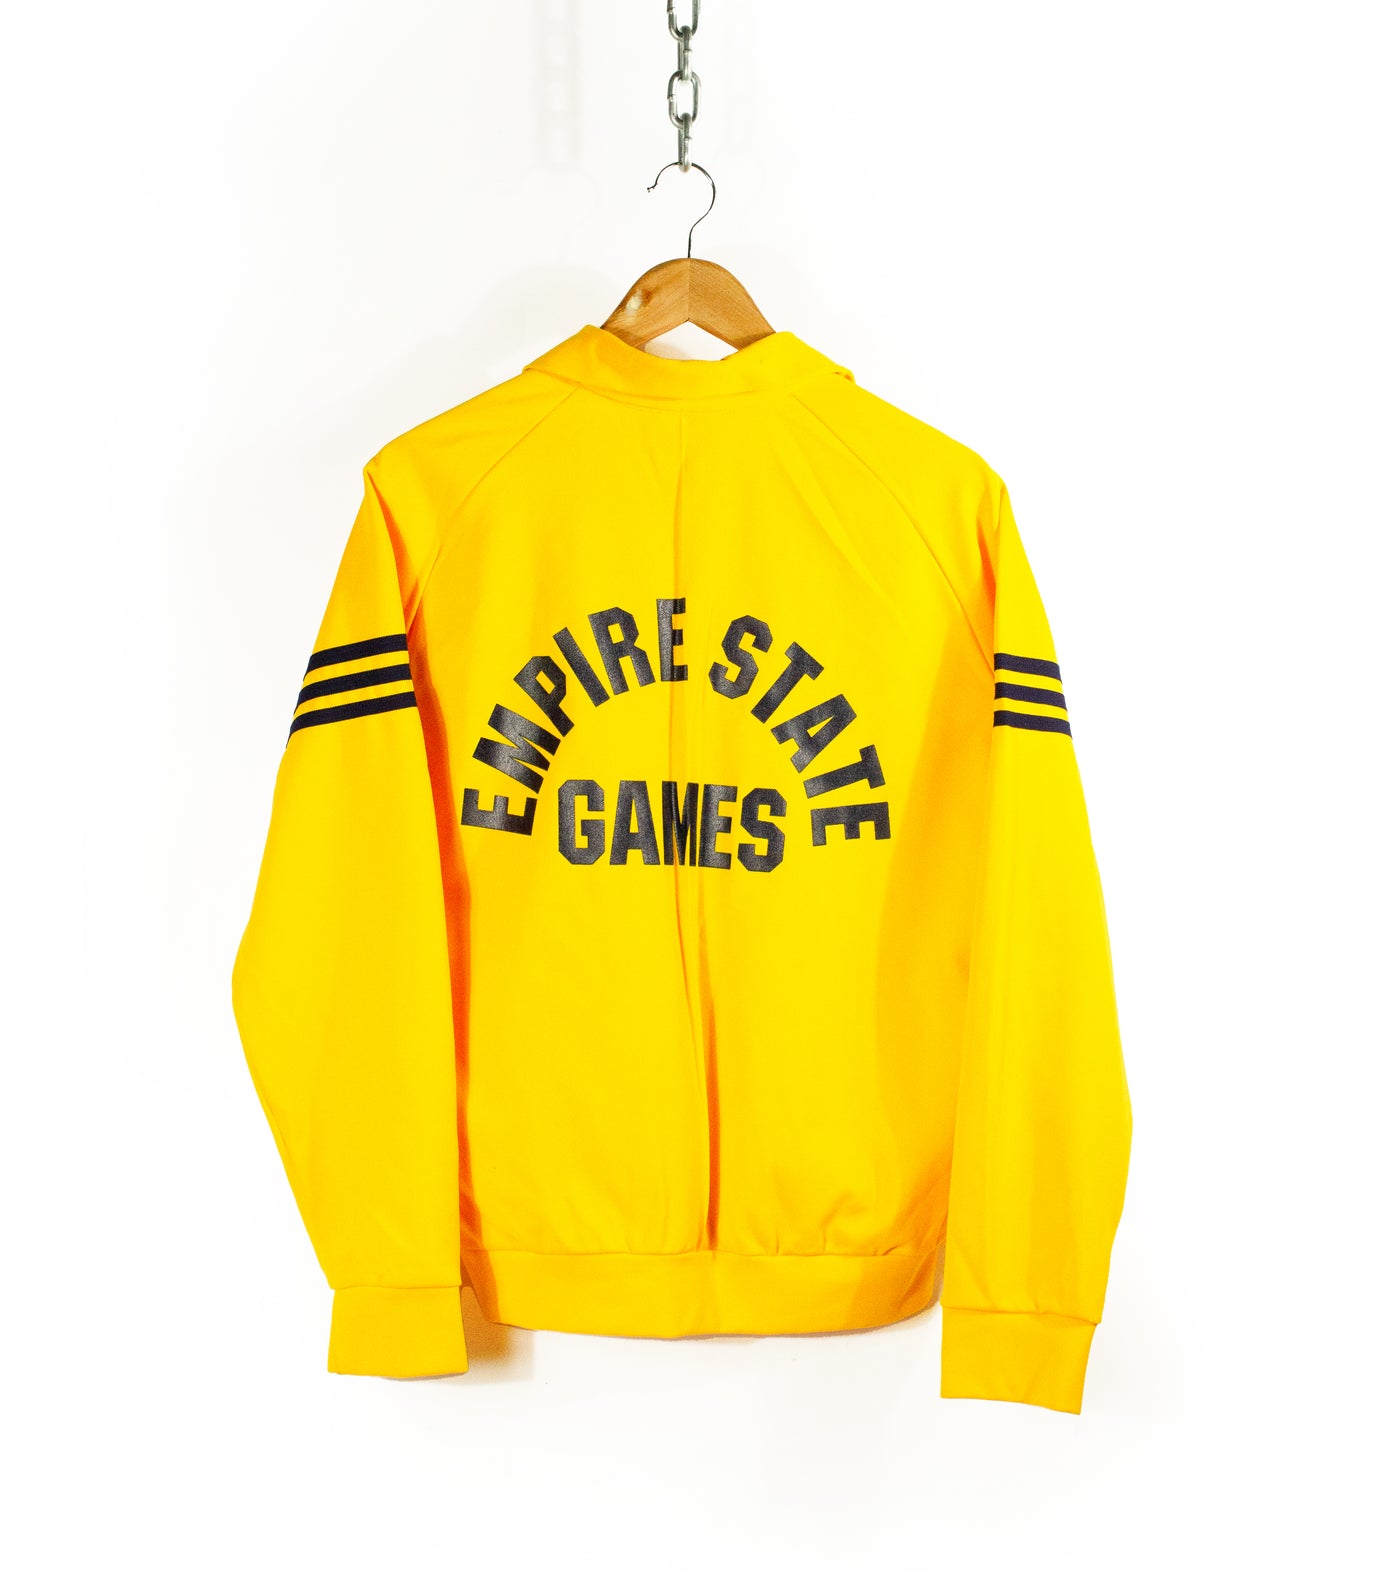 Vintage 1985 Empire State Games Lake Placid Warm Up Jacket